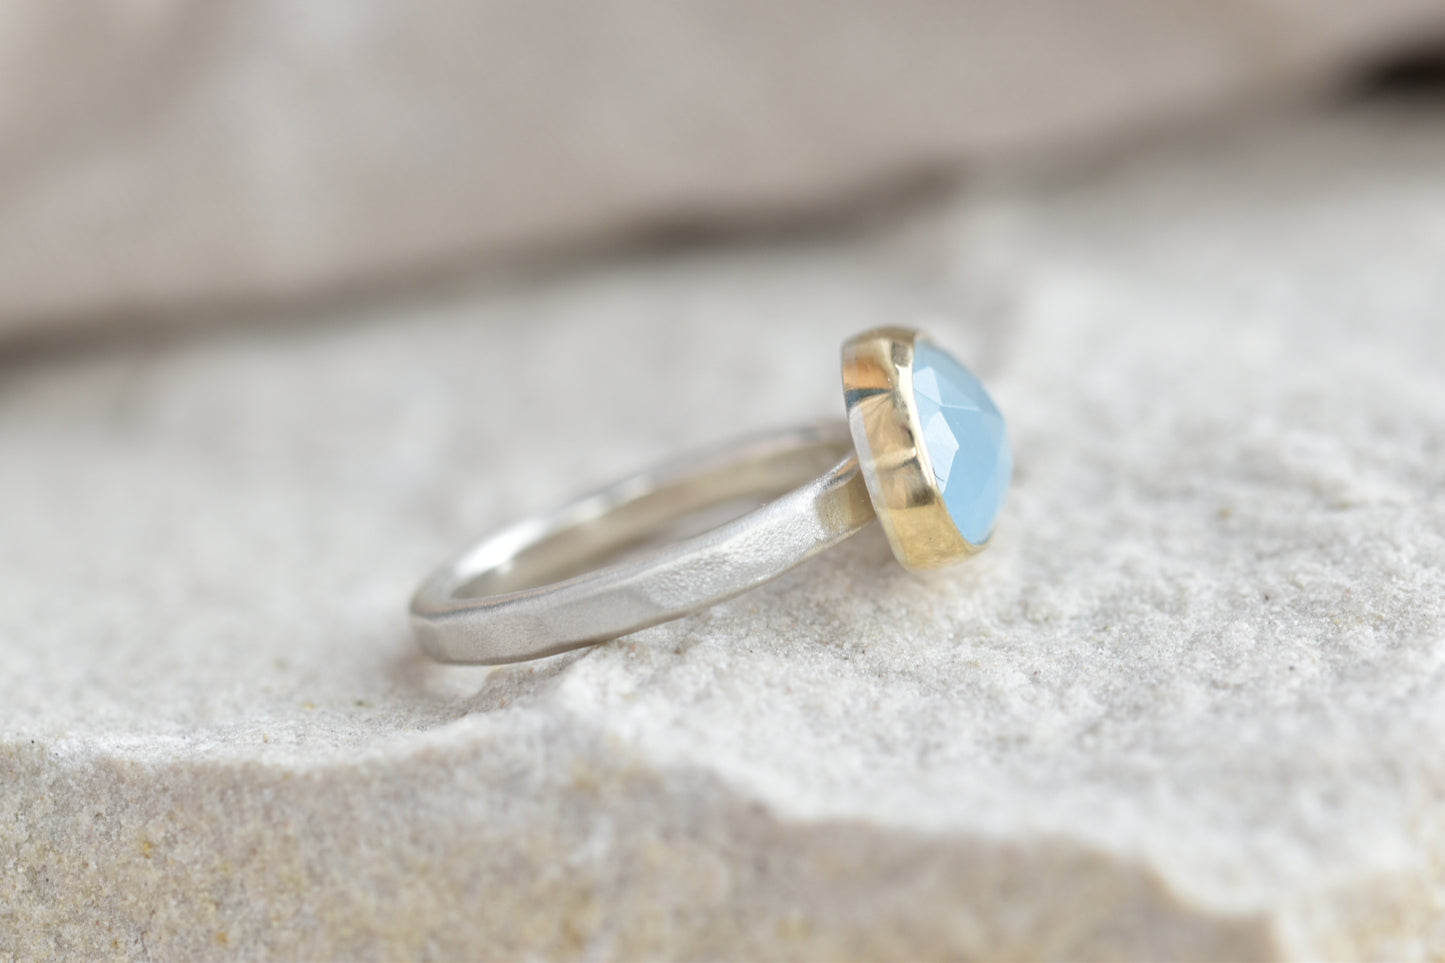 Aquamarine Gold/Silver Ring